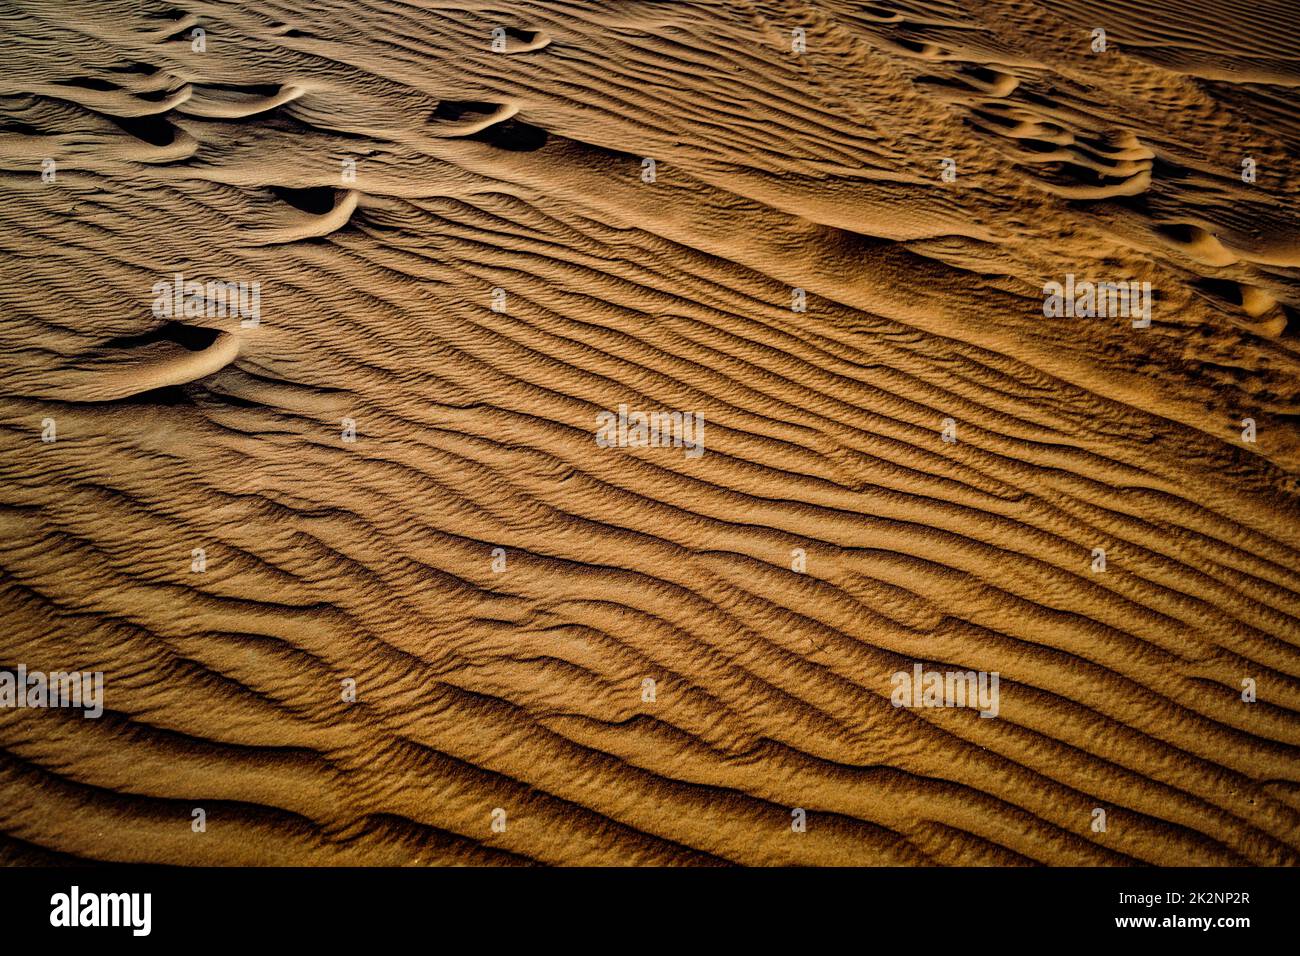 Arabian desert image Stock Photo